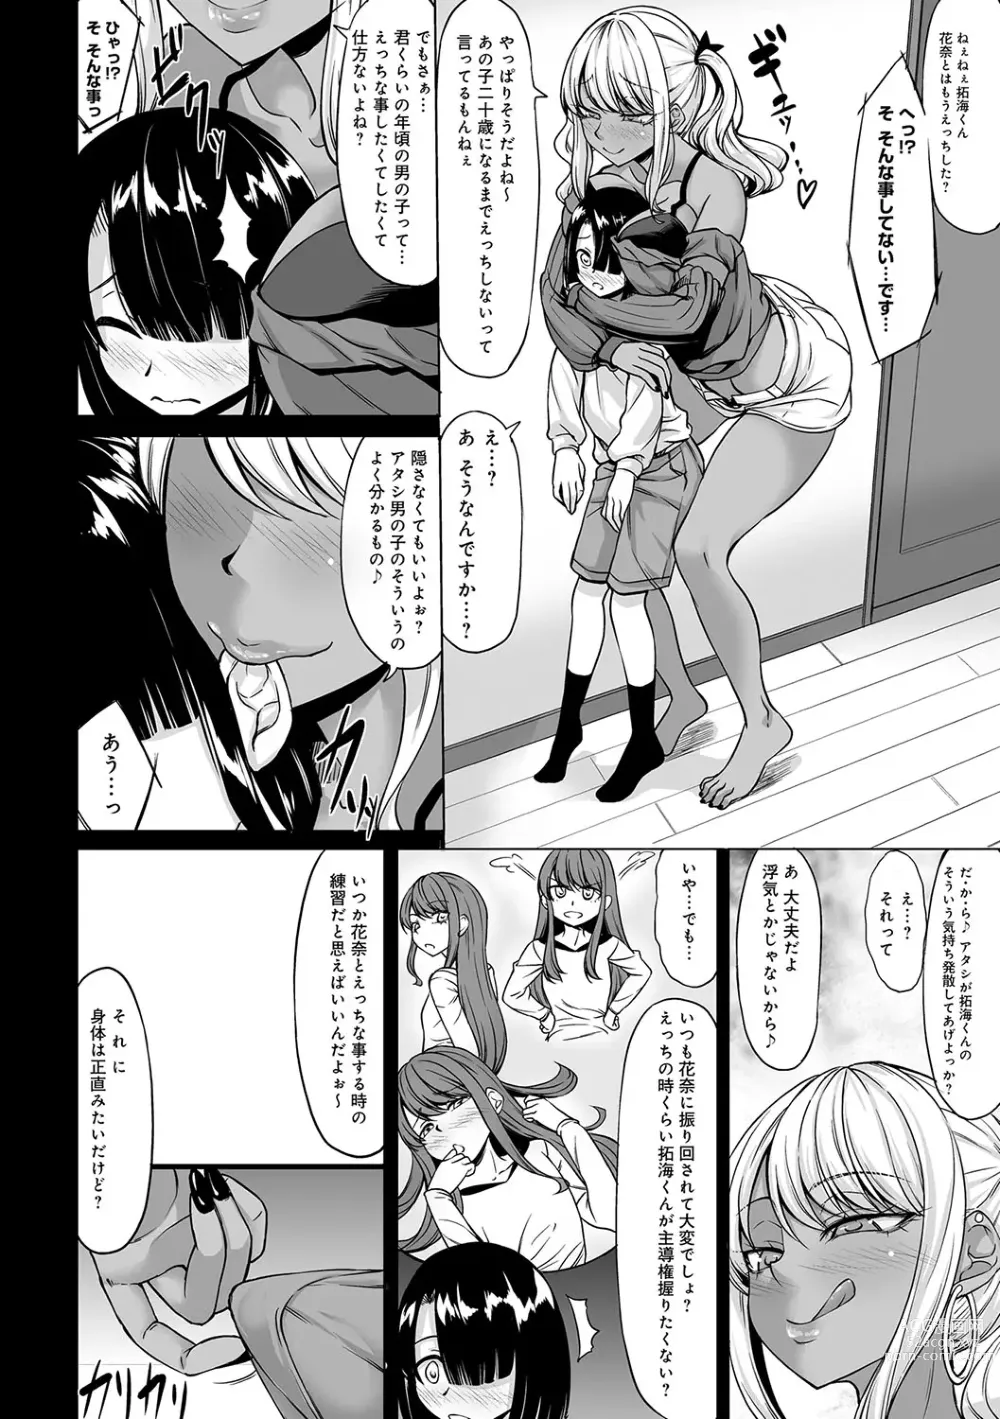 Page 11 of manga A Cup no Kanojo yori J Cup no Kuro Gal no Hou ga Yoi yo ne? - Youd rather have a tanned gal with J-cup boobs than an A-cup girlfriend, wouldn't you?